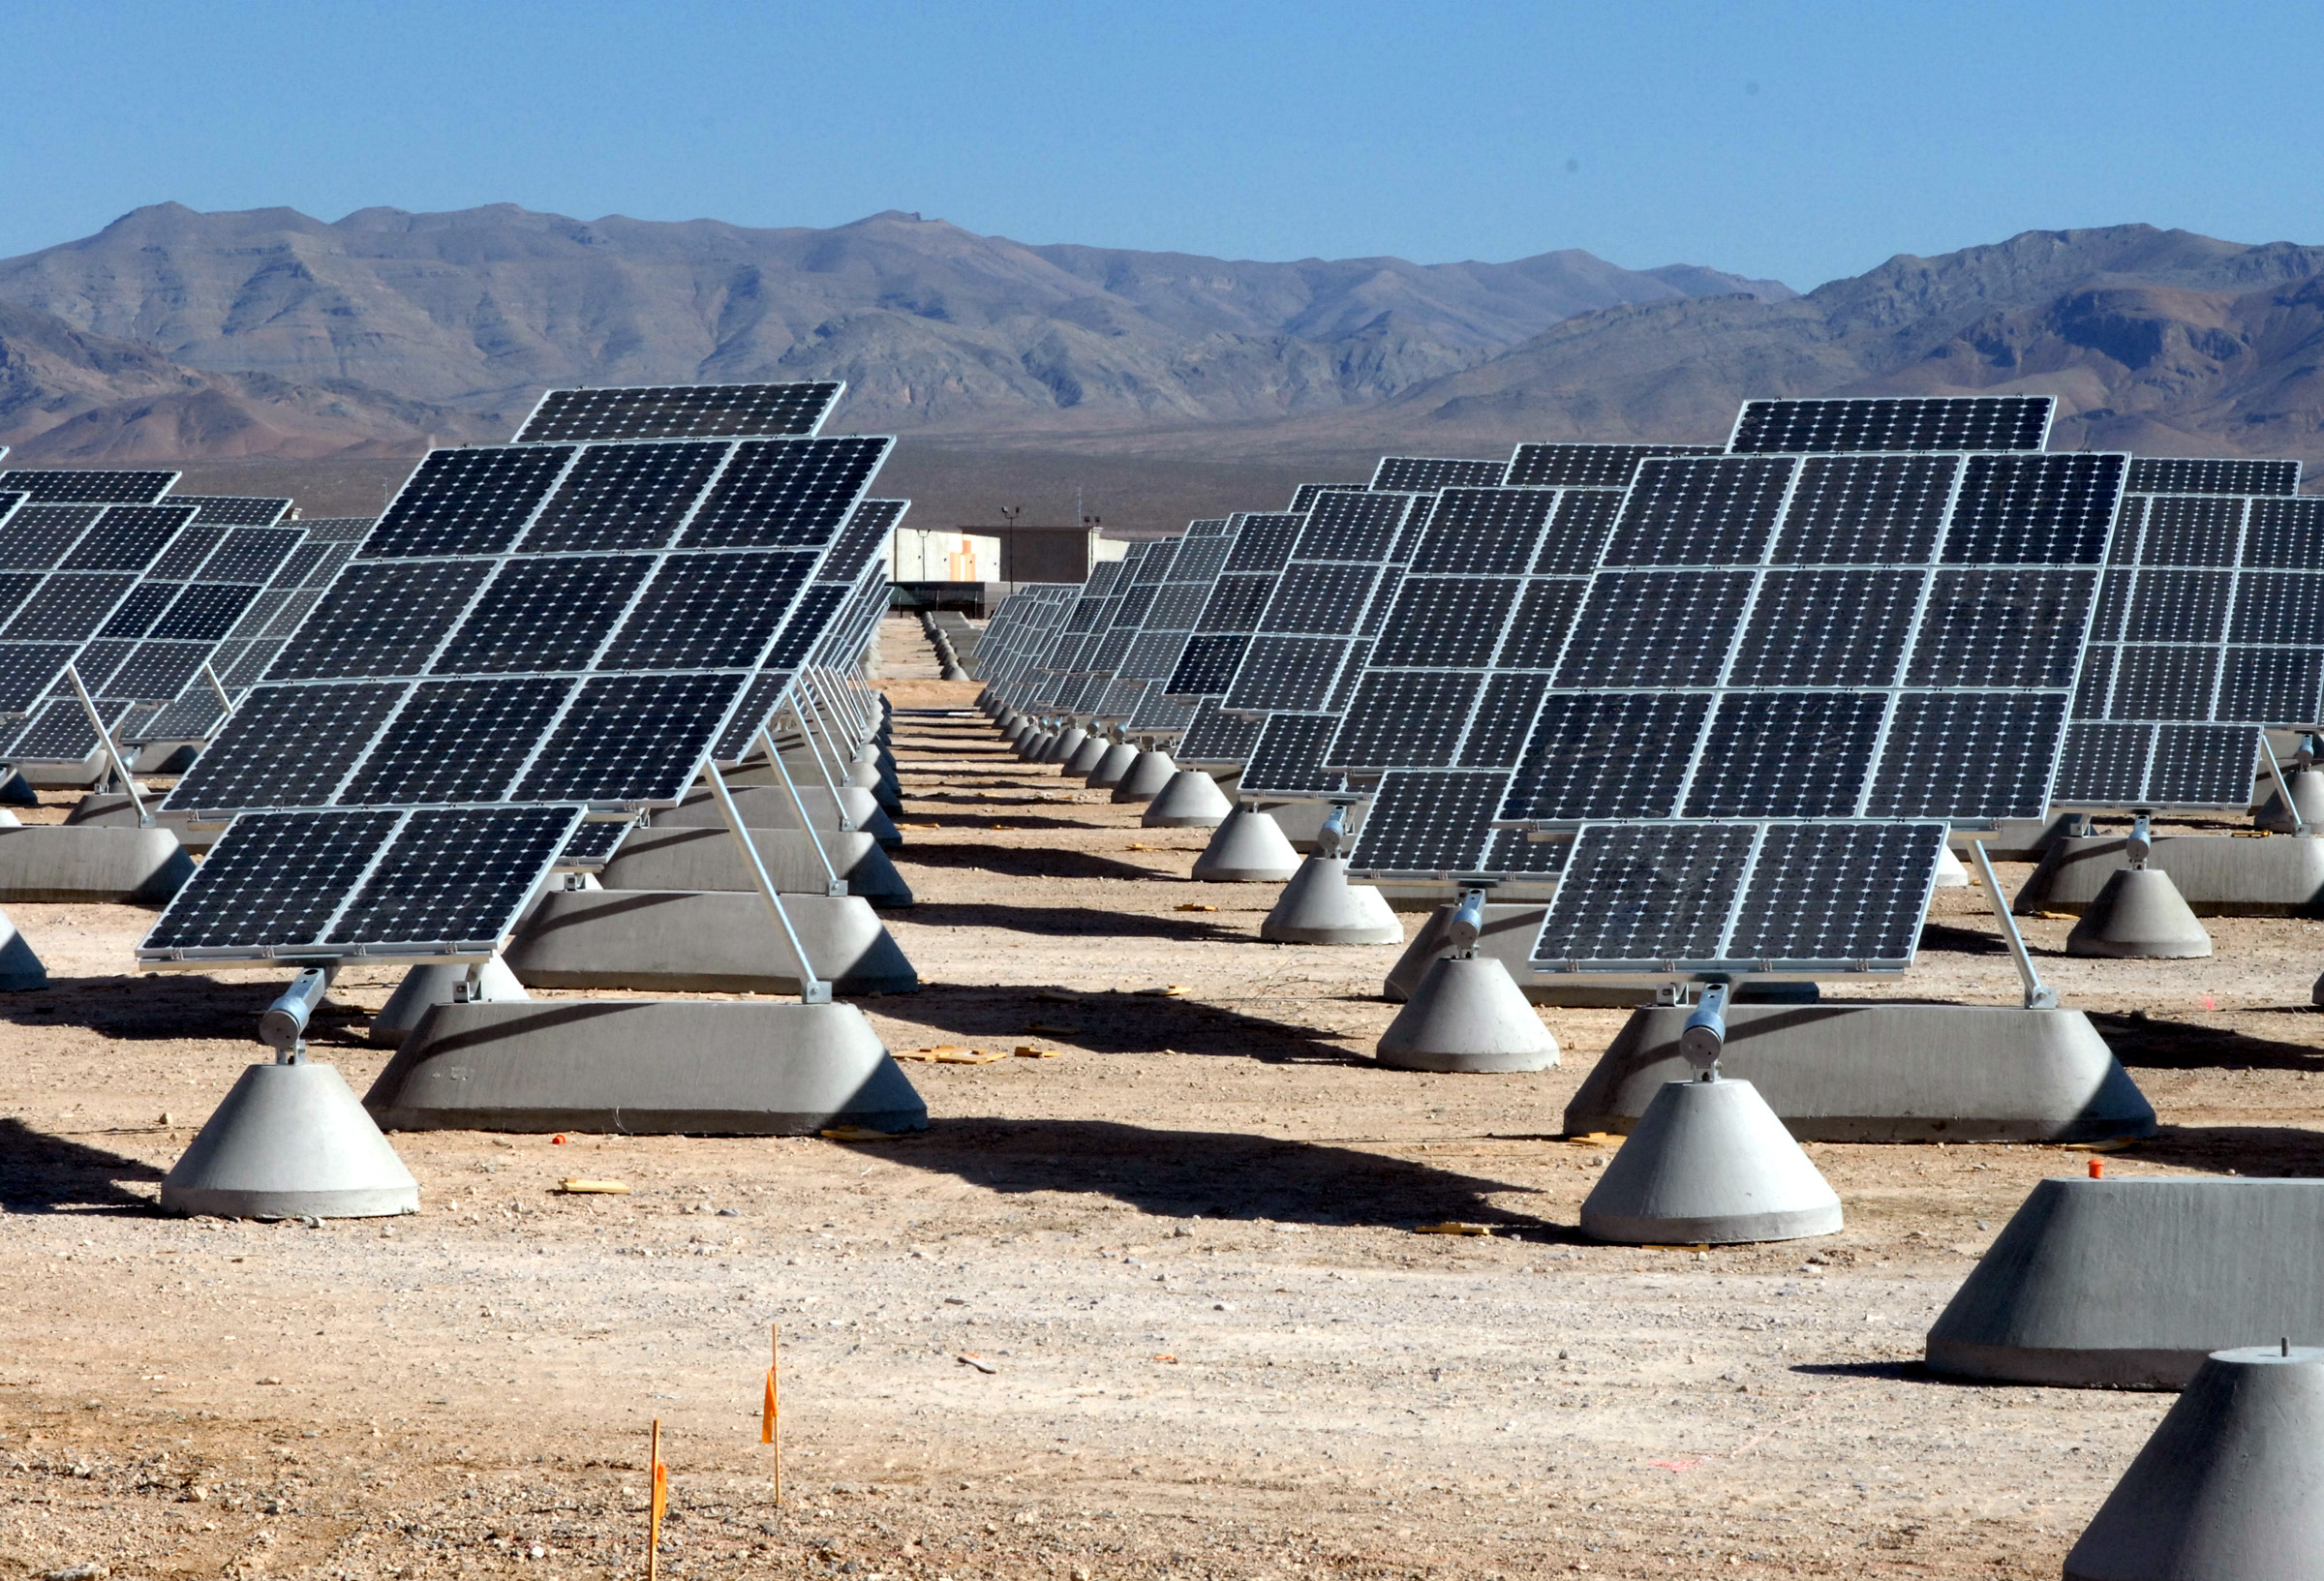 Nellis_AFB_Solar_panels